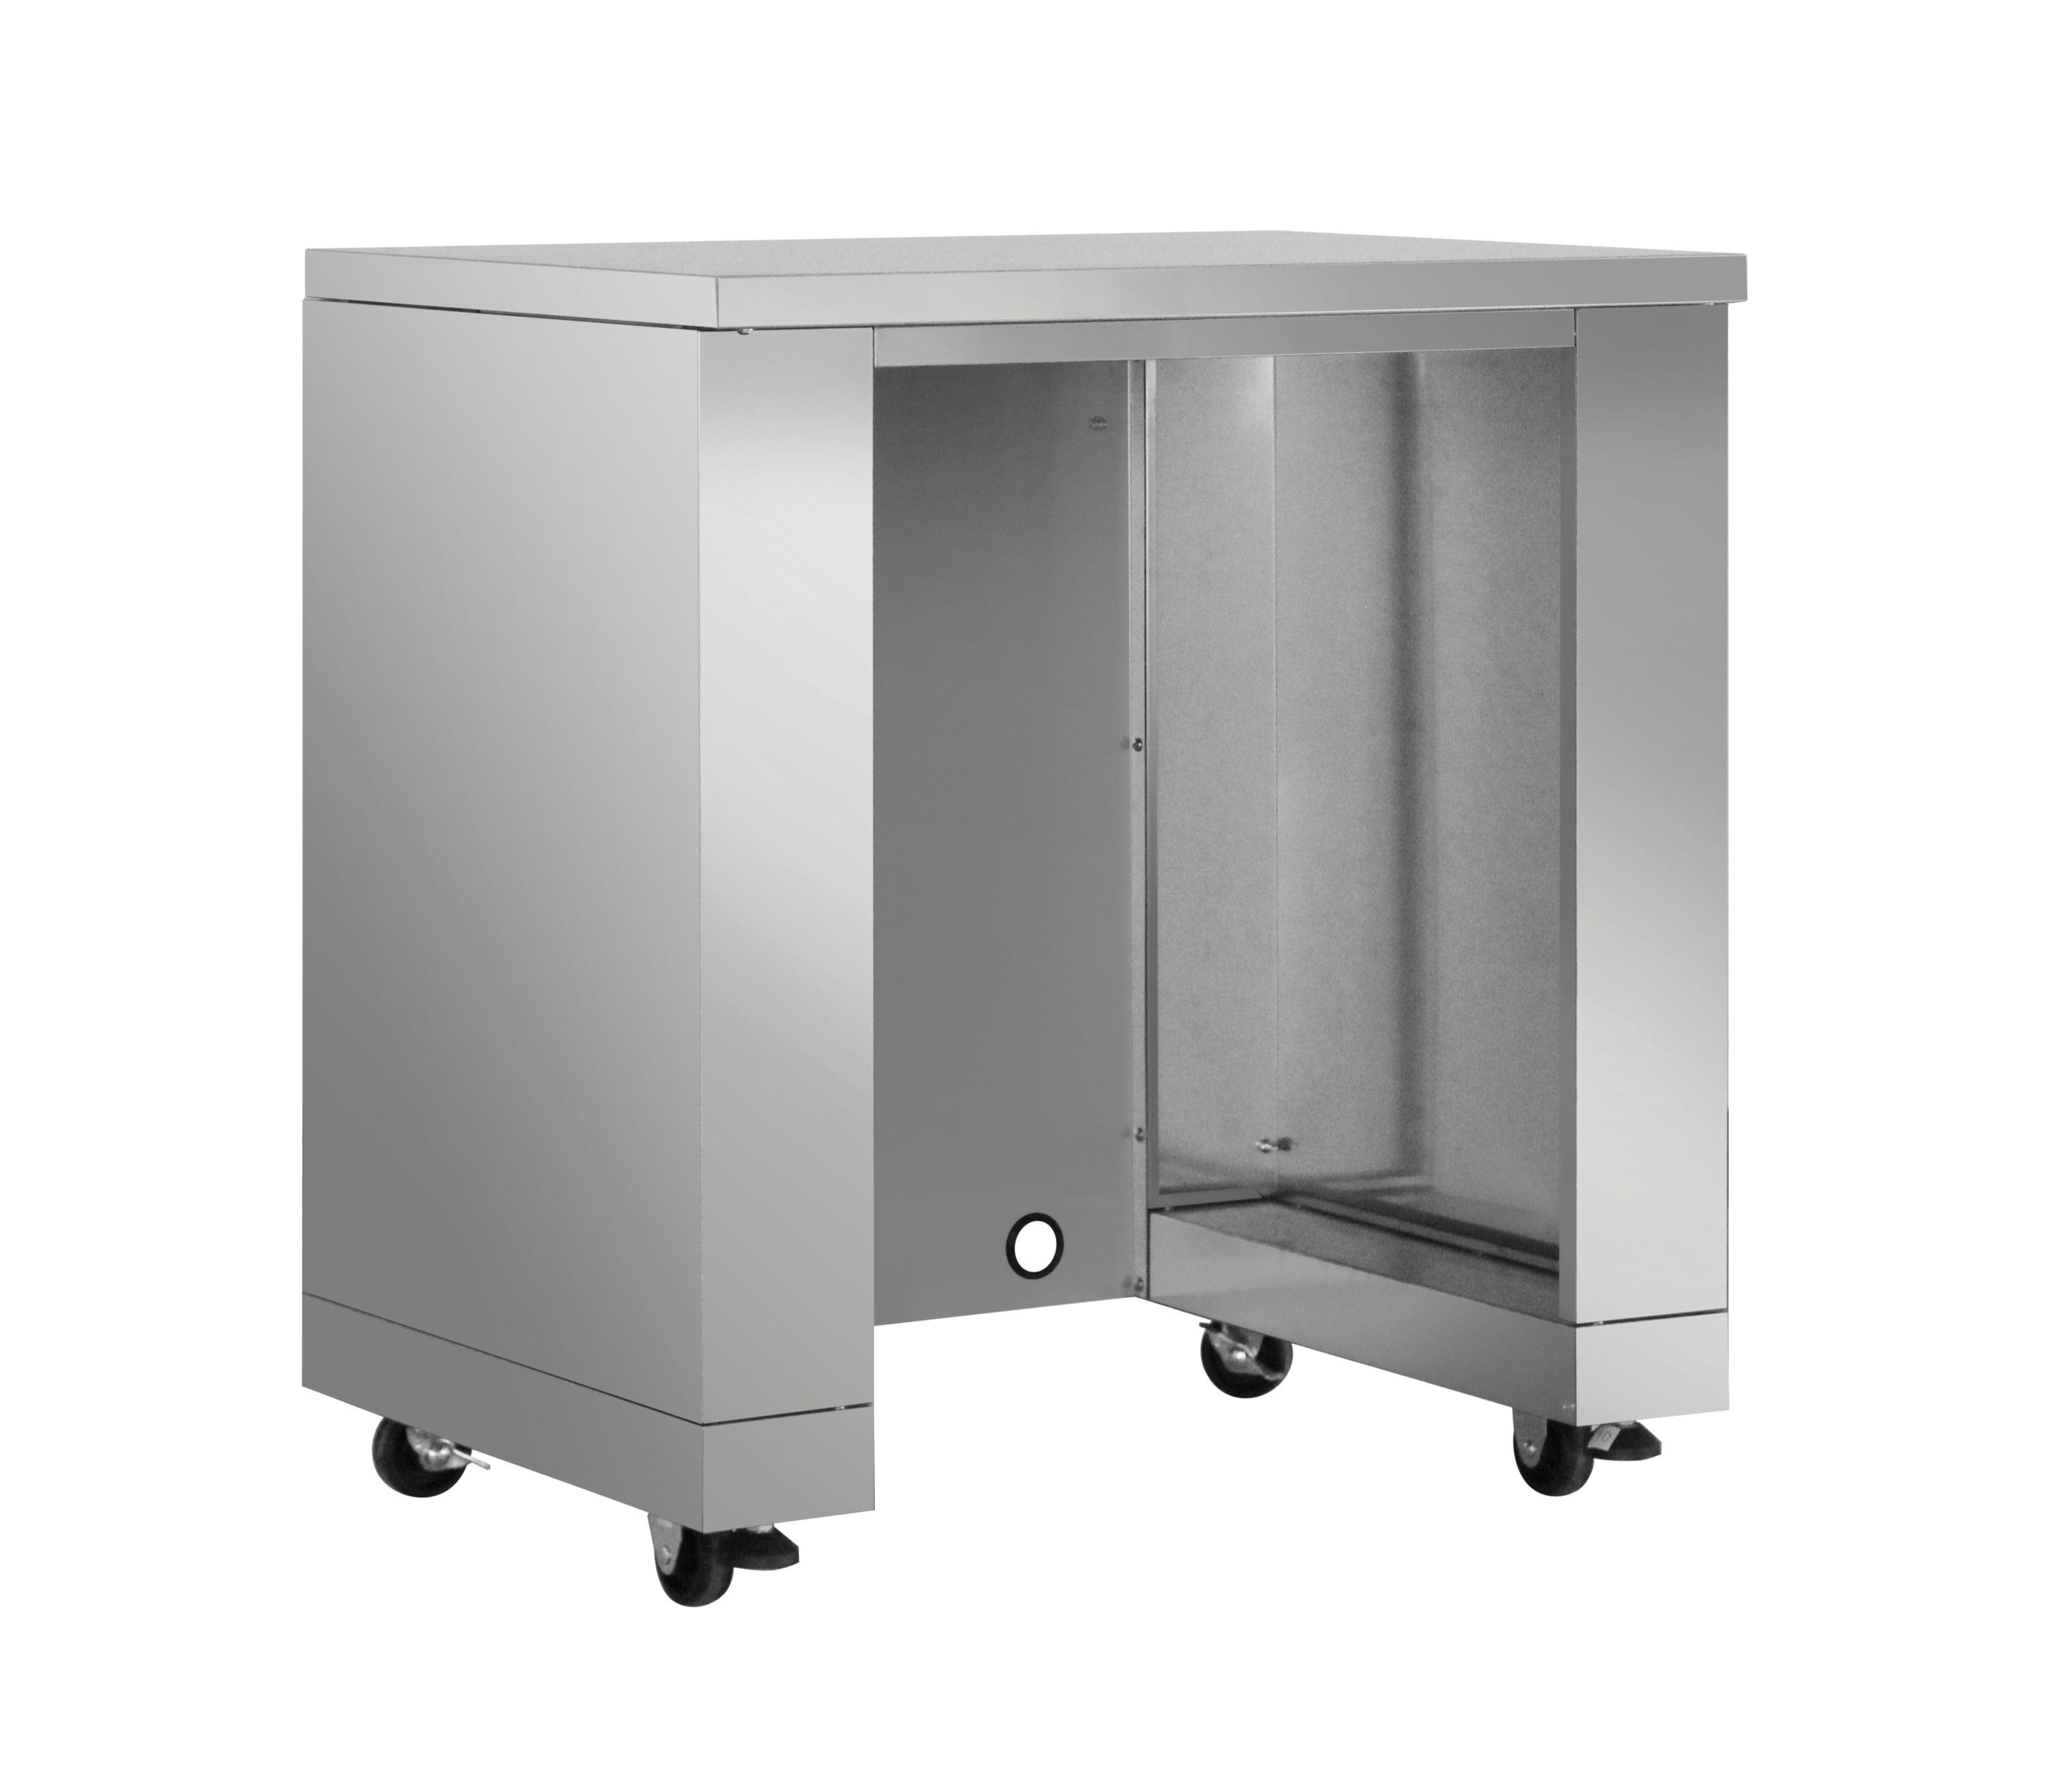 Thor Kitchen 35" Outdoor Kitchen Refrigerator Cabinet in Stainless Steel MK02SS304 Outdoor Appliances MK02SS304 Luxury Appliances Direct